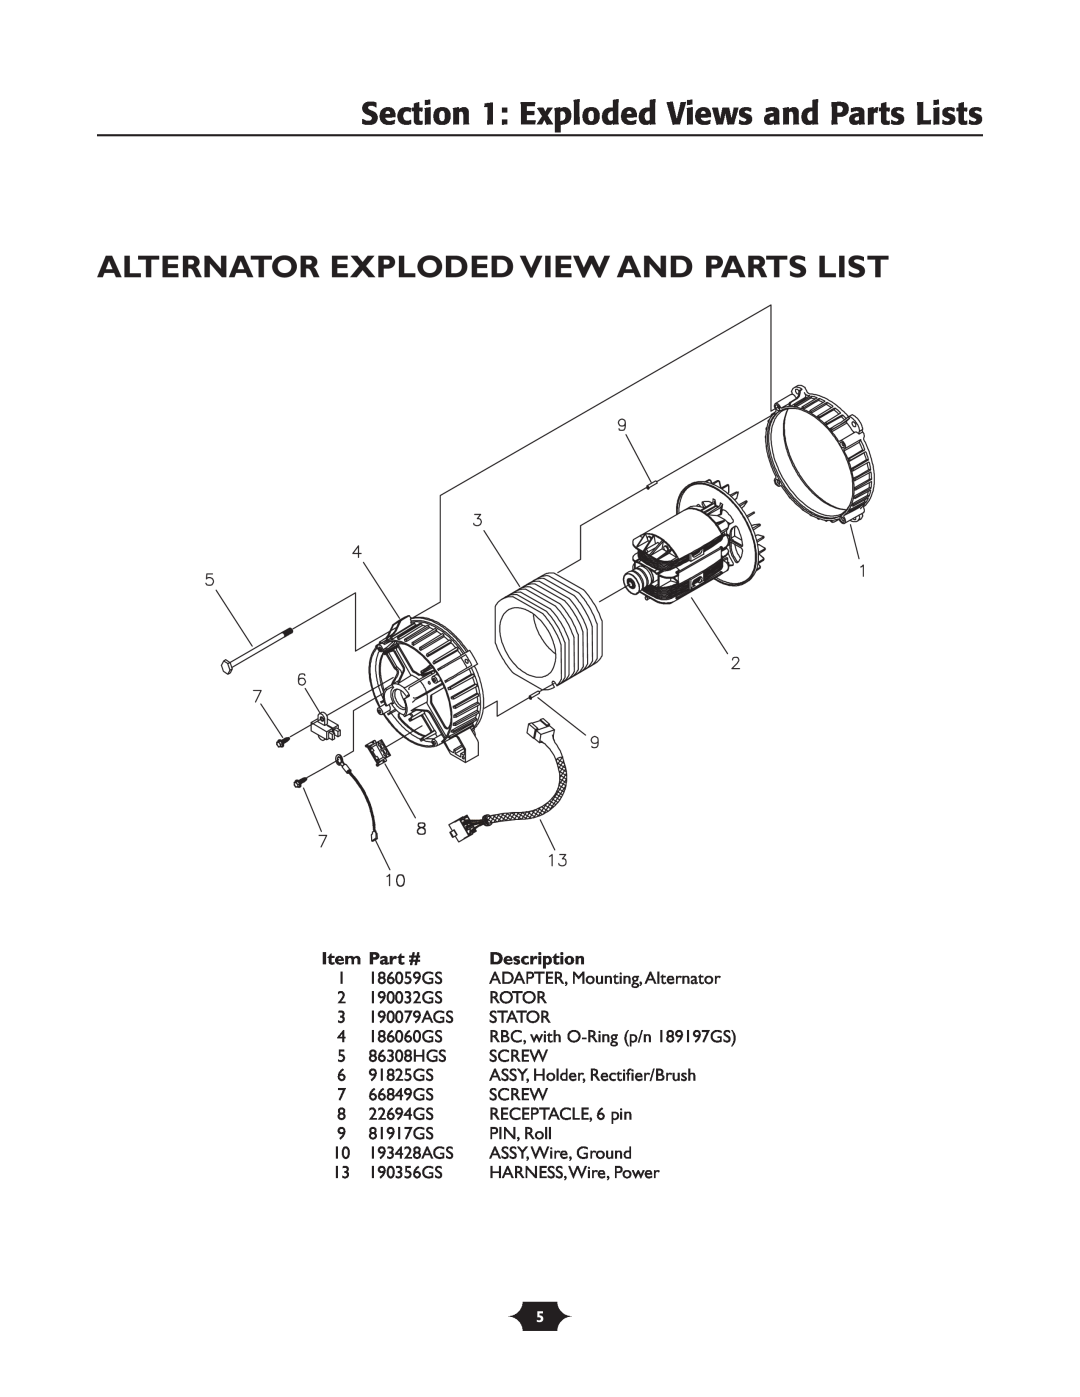 Briggs & Stratton 1919 manual Alternator Exploded View And Parts List, Exploded Views and Parts Lists, Description 